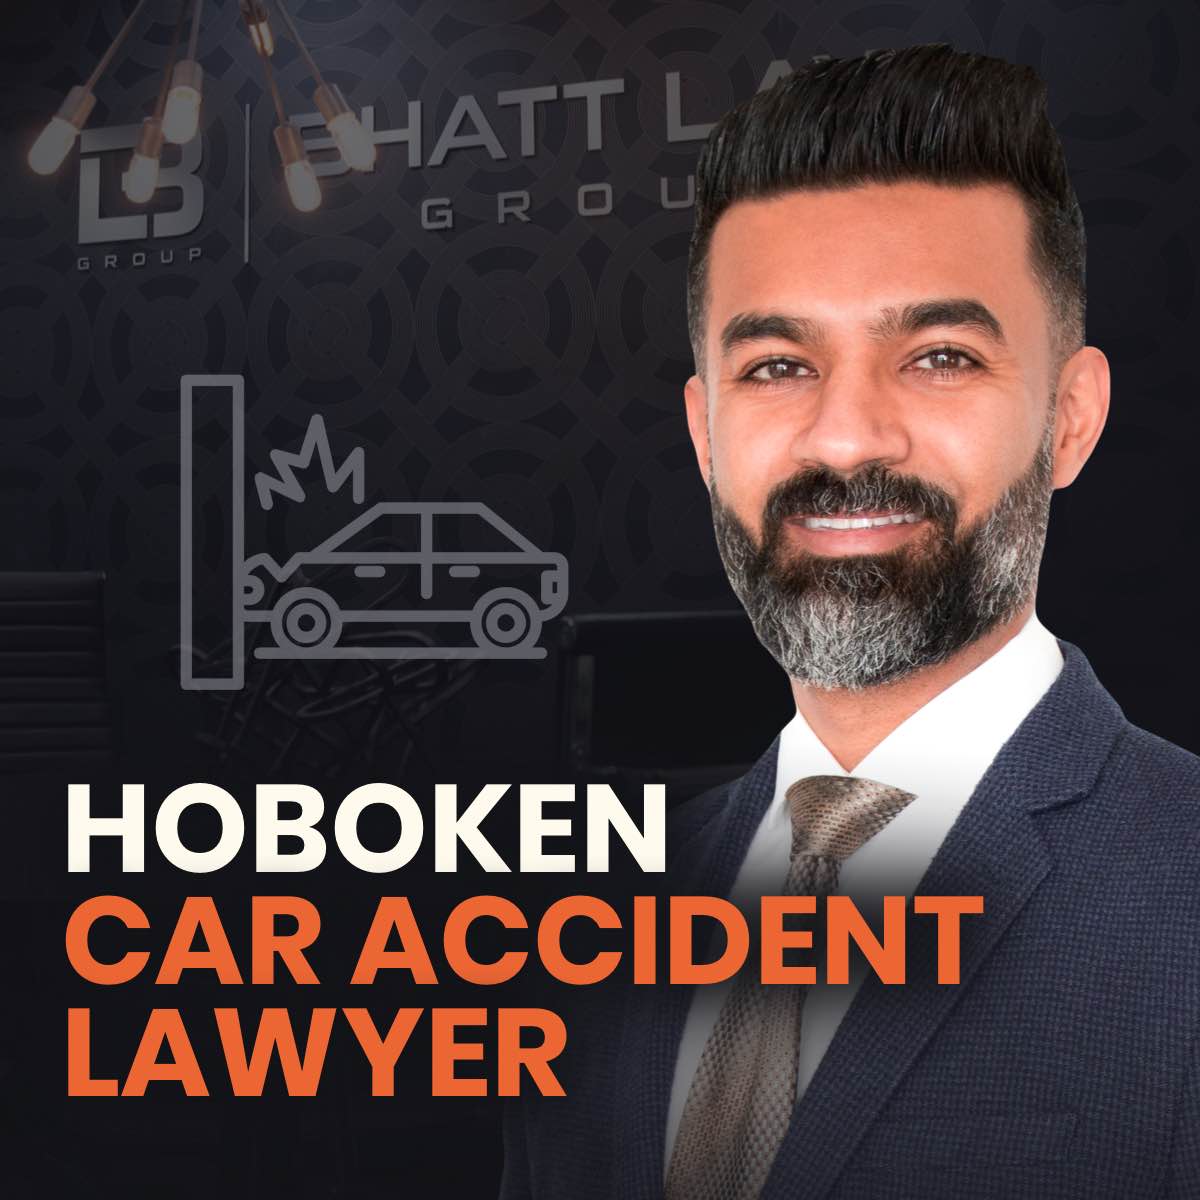 Hoboken Car Accident Lawyer